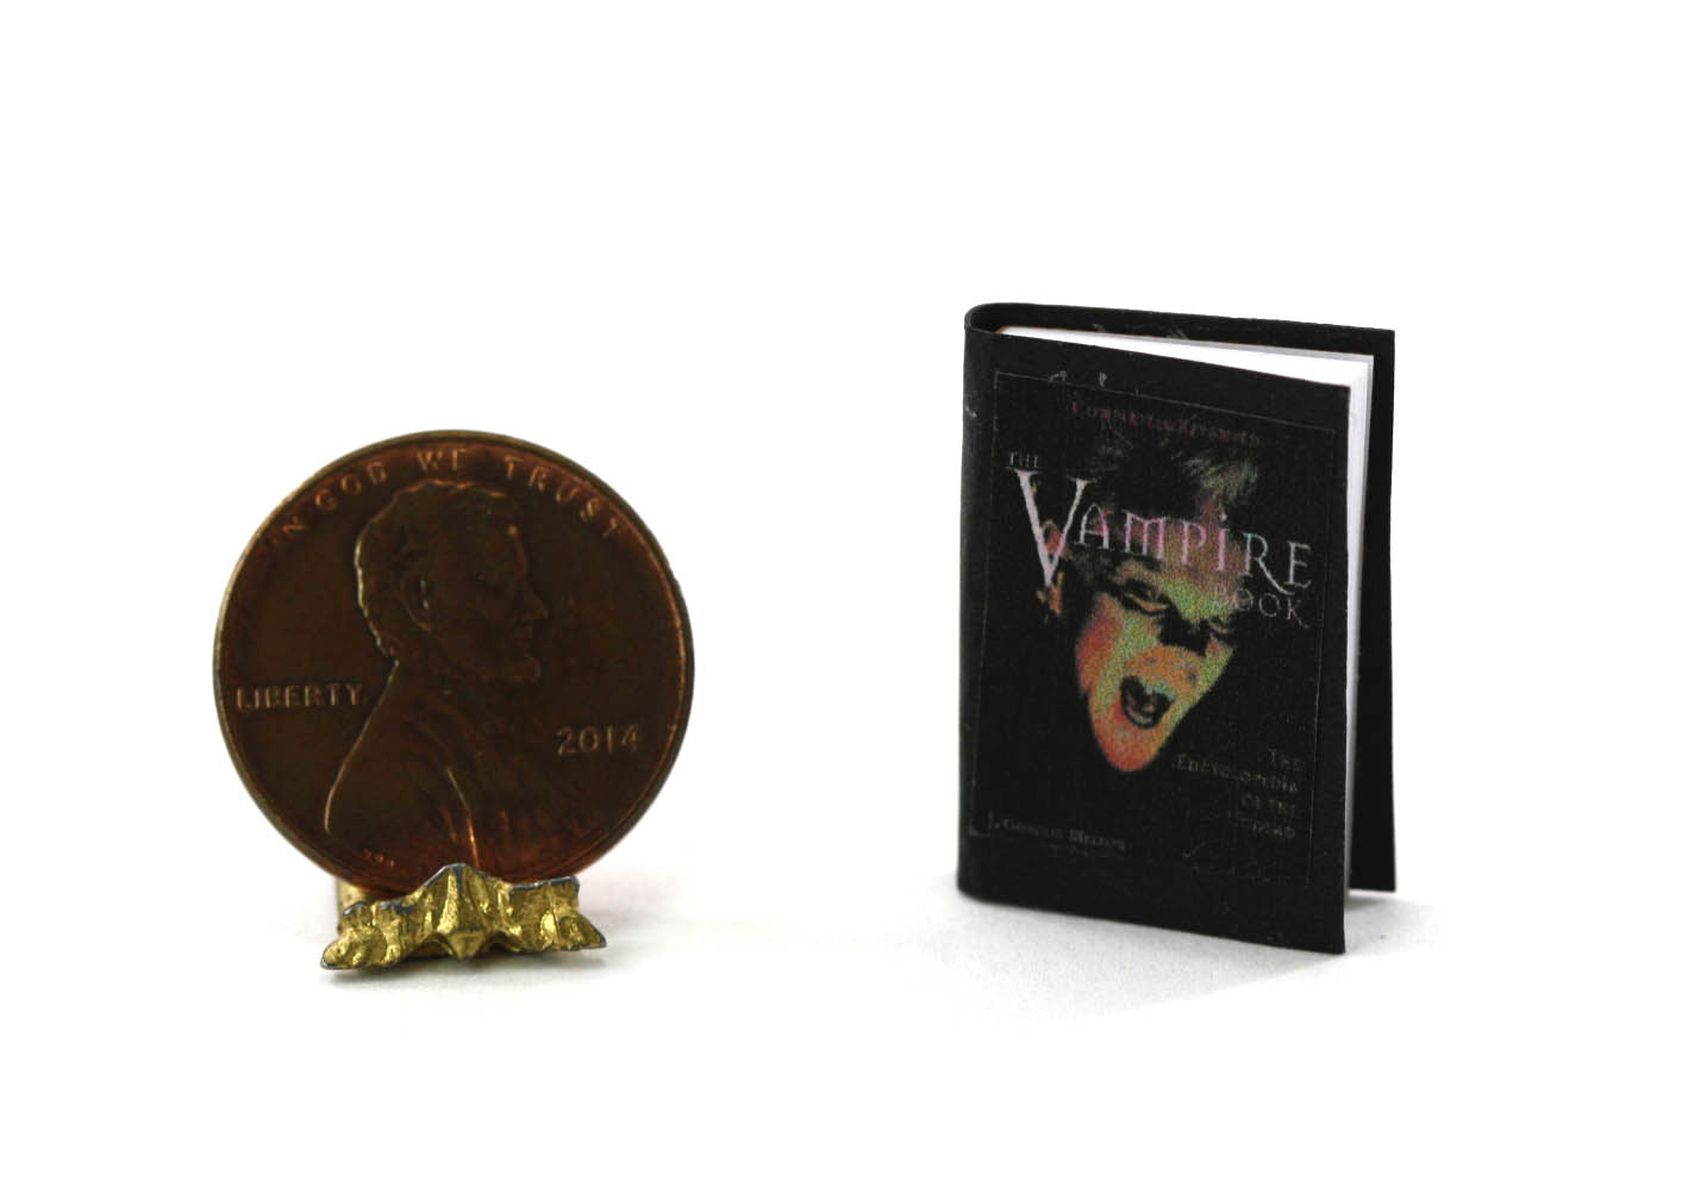 Vampire Book